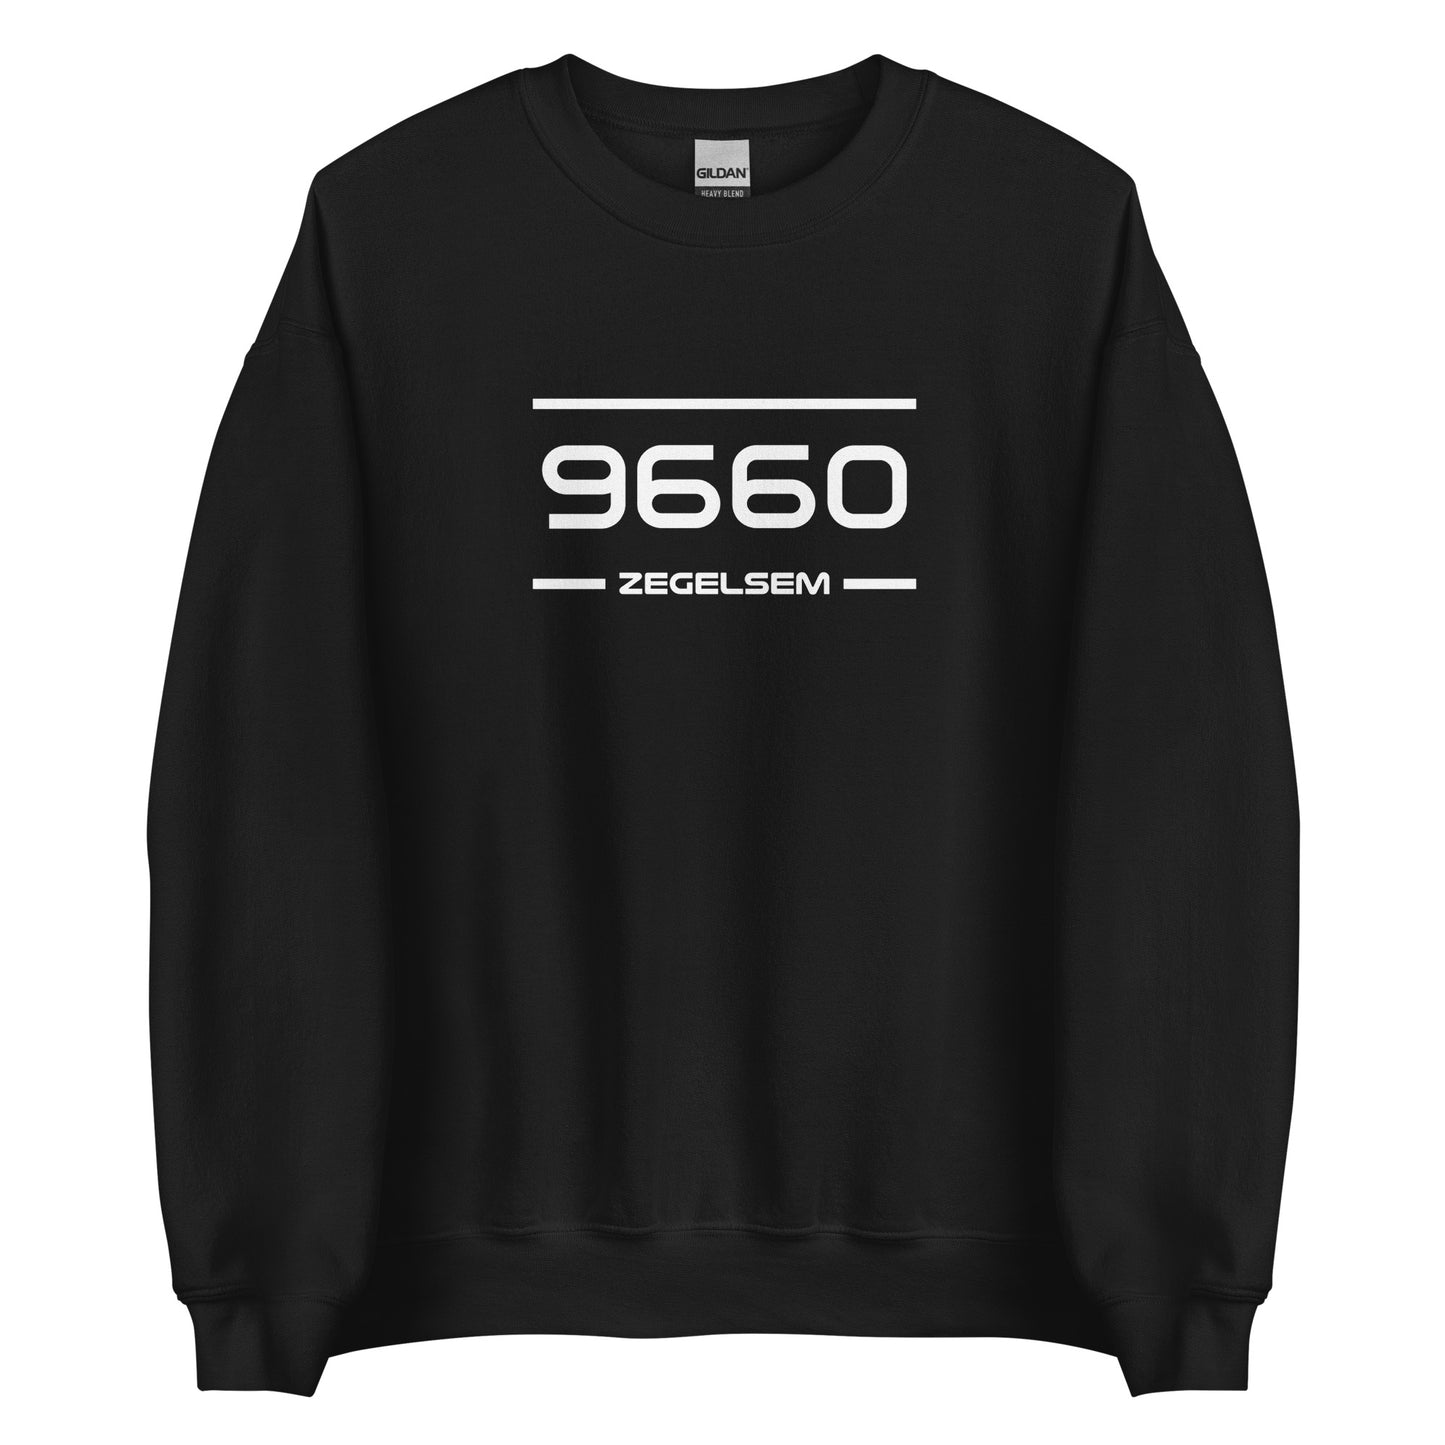 Sweater - 9660 - Zegelsem (M/V)